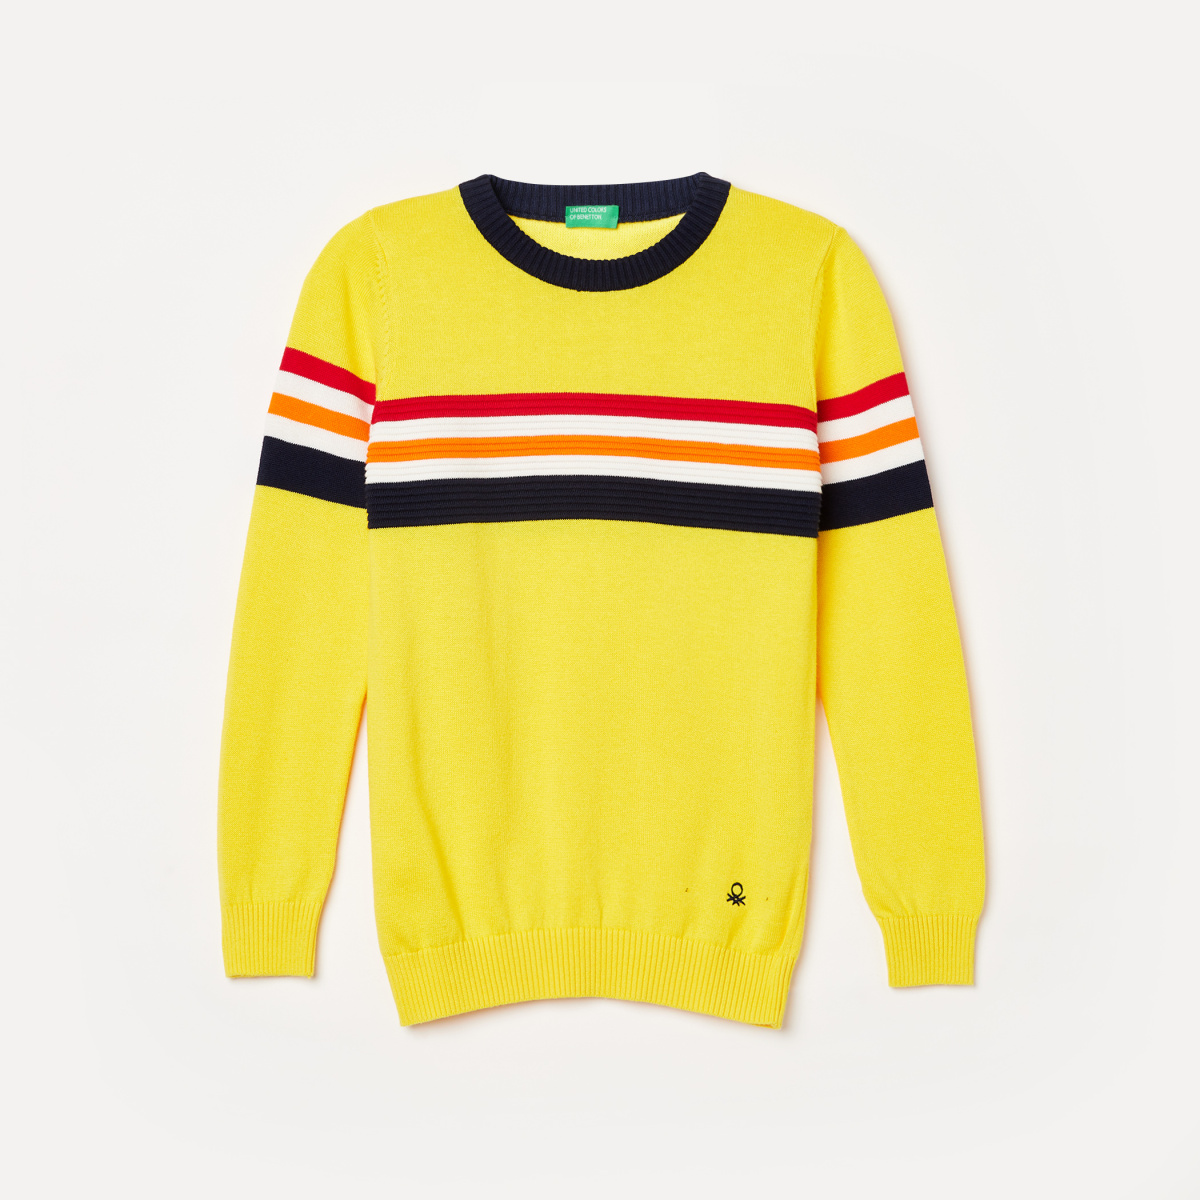 UNITED COLORS OF BENETTON Boys Colourblocked Sweater